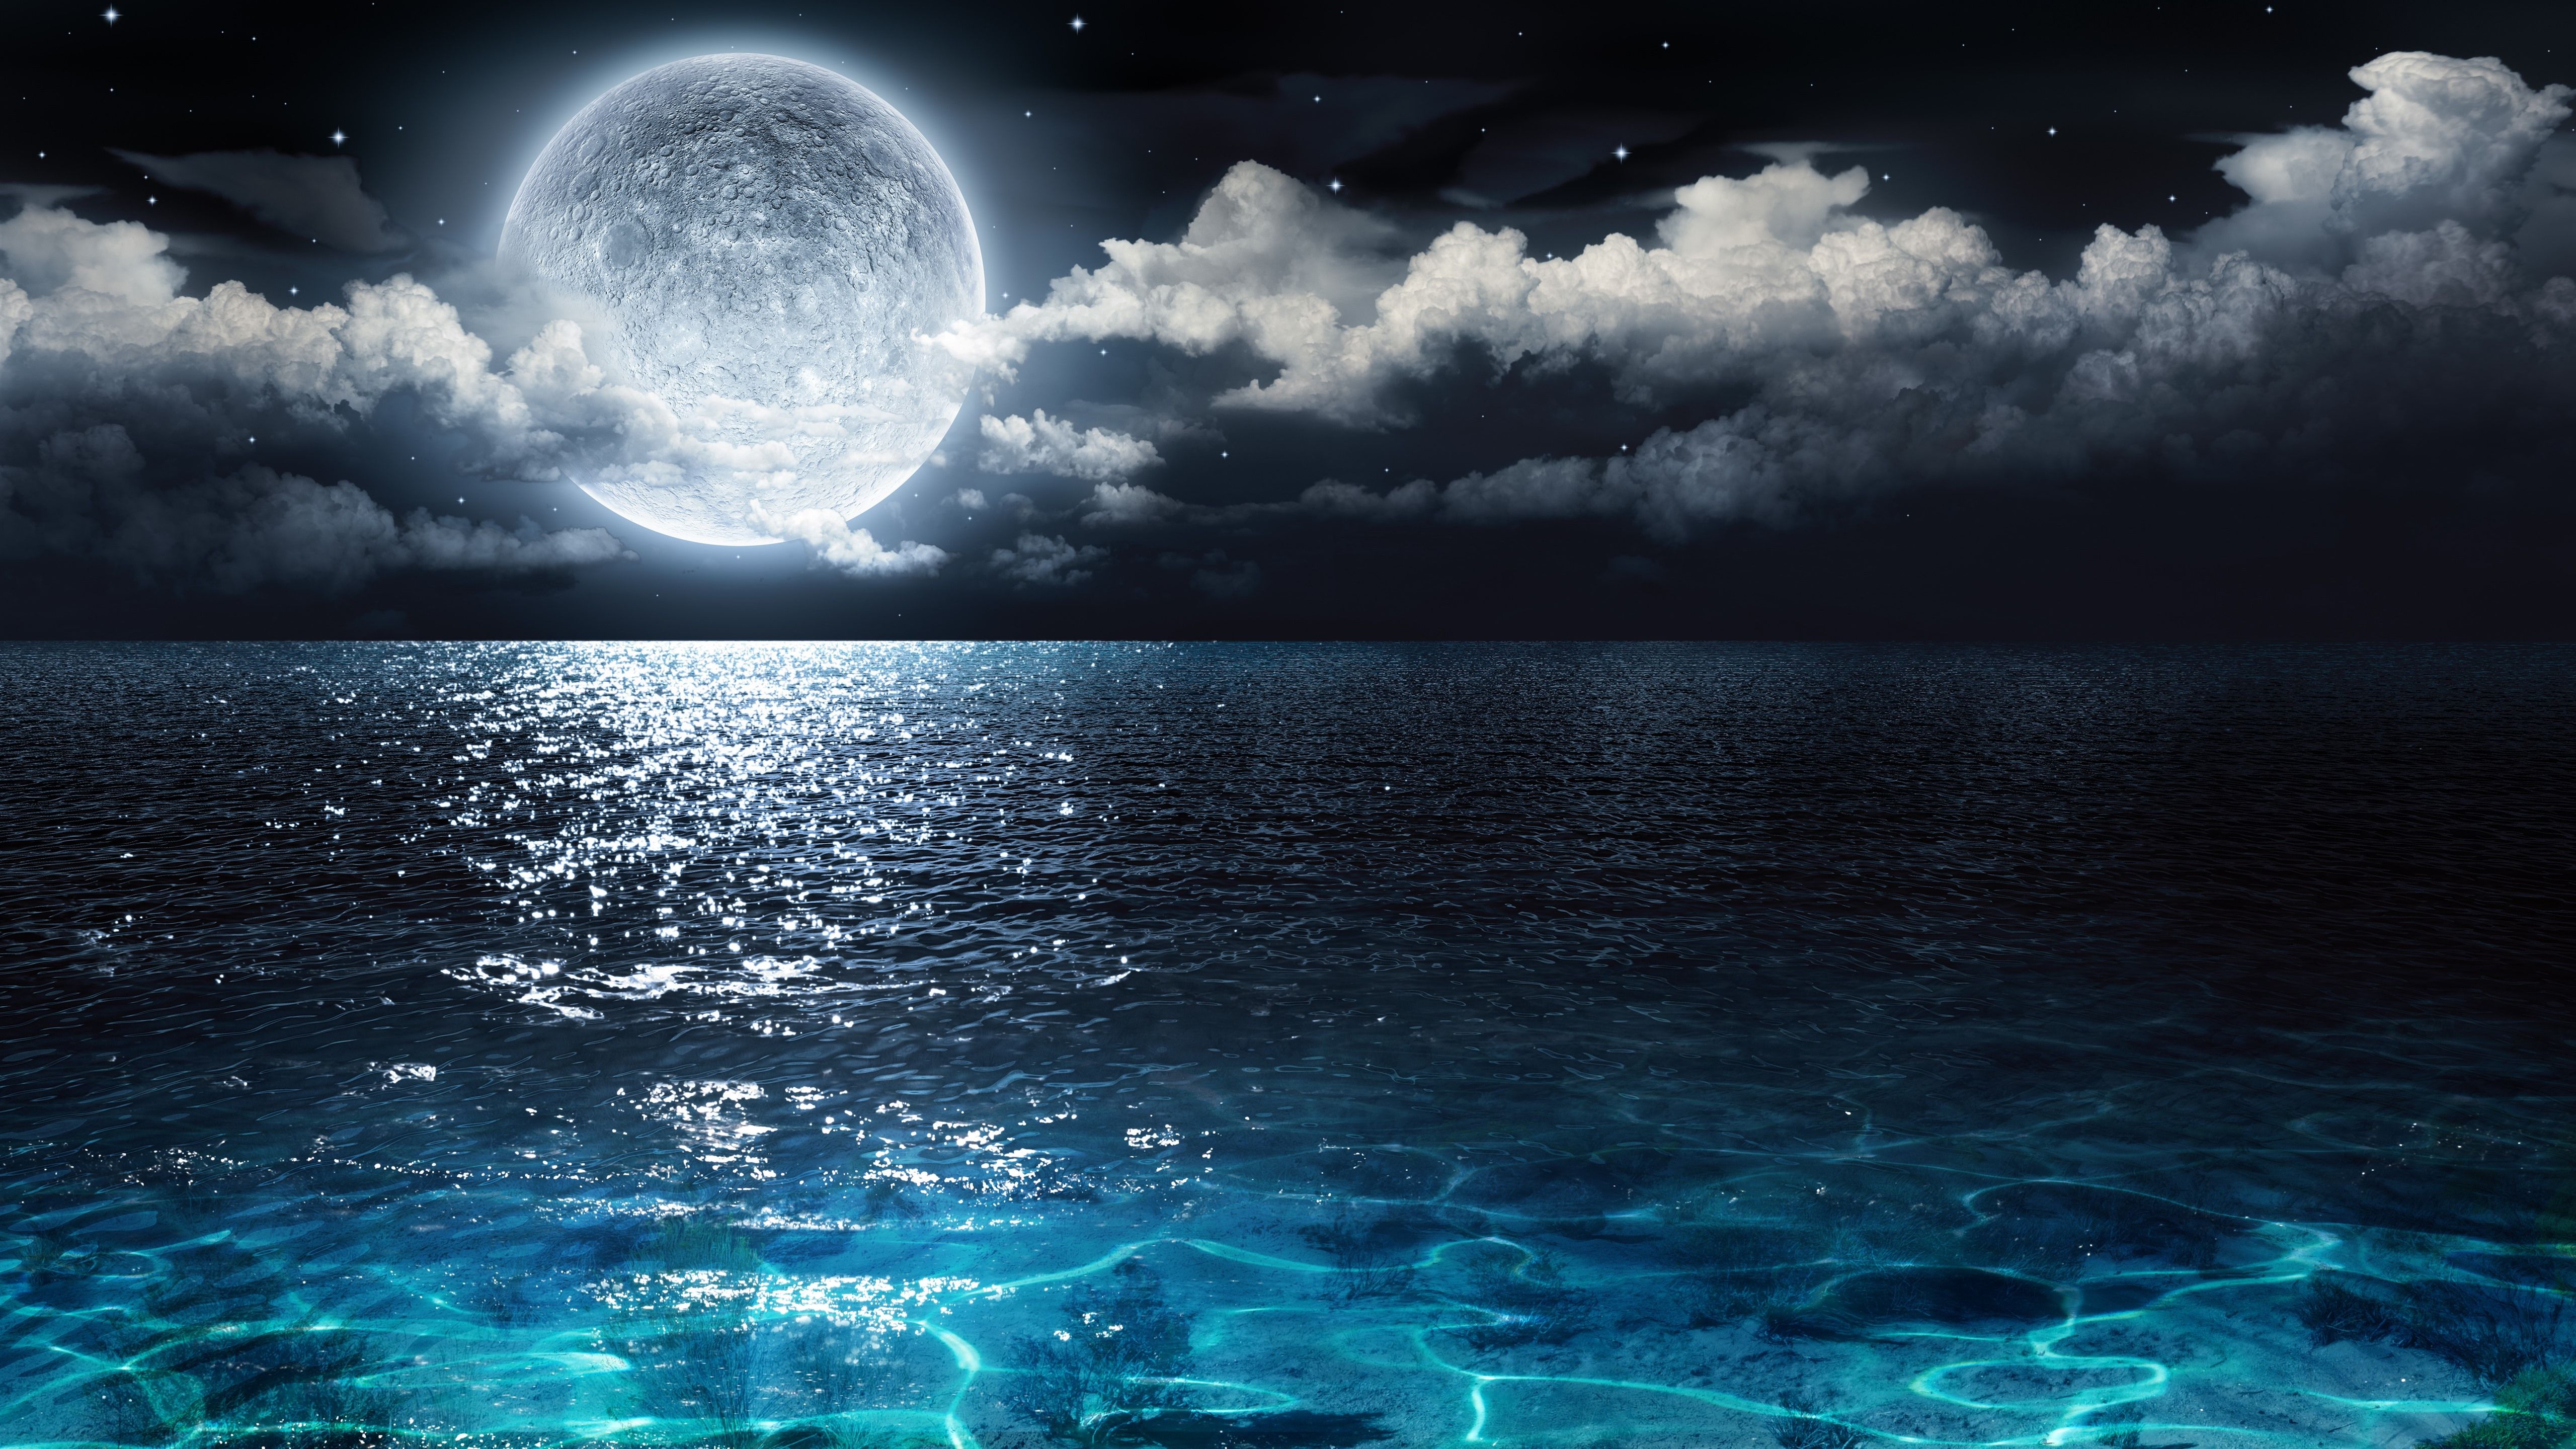 Wallpaper Full moon, blue sea, clouds, night, beautiful nature landscape 5120x2880 UHD 5K Picture, Image